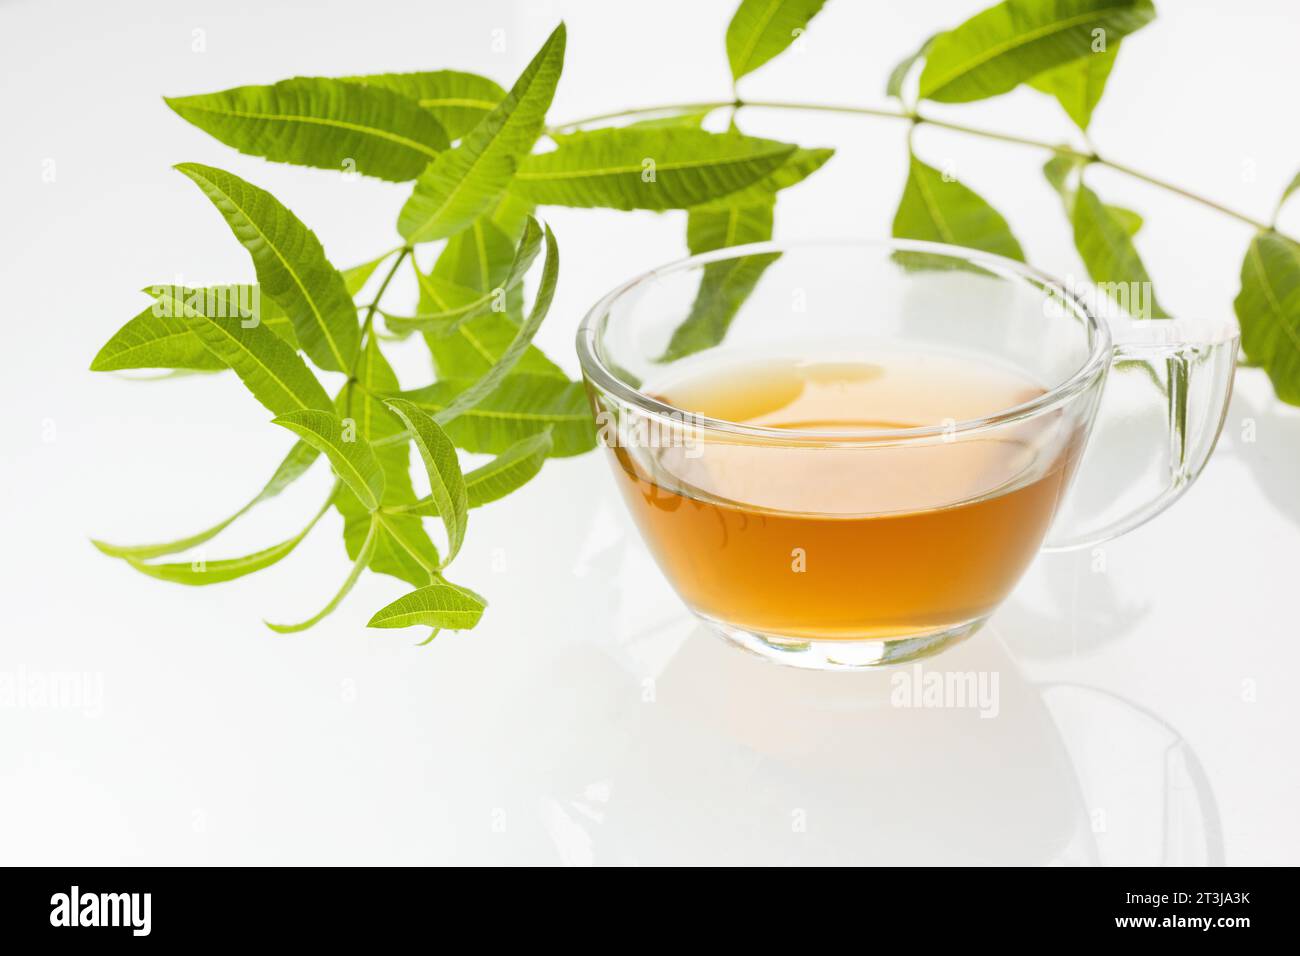 Aloysia citrodora - Lemon verbena hot drink - Organic lemon verbena fresh plant Stock Photo